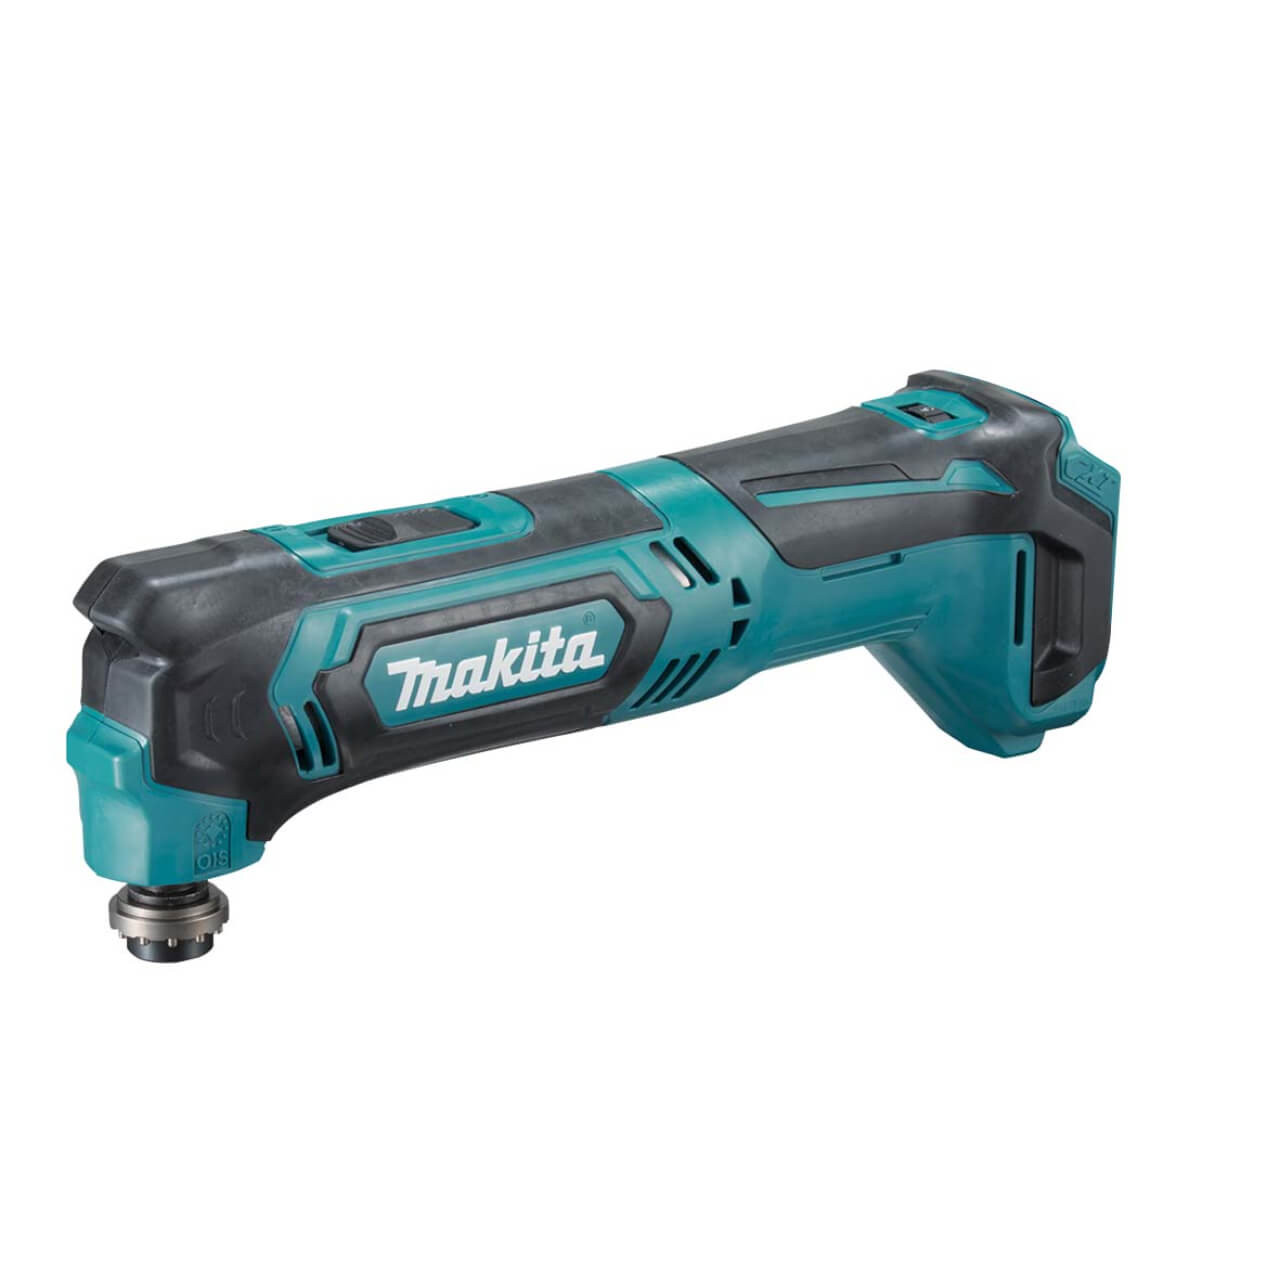 Makita 12V Max Multi-tool - Tool Only